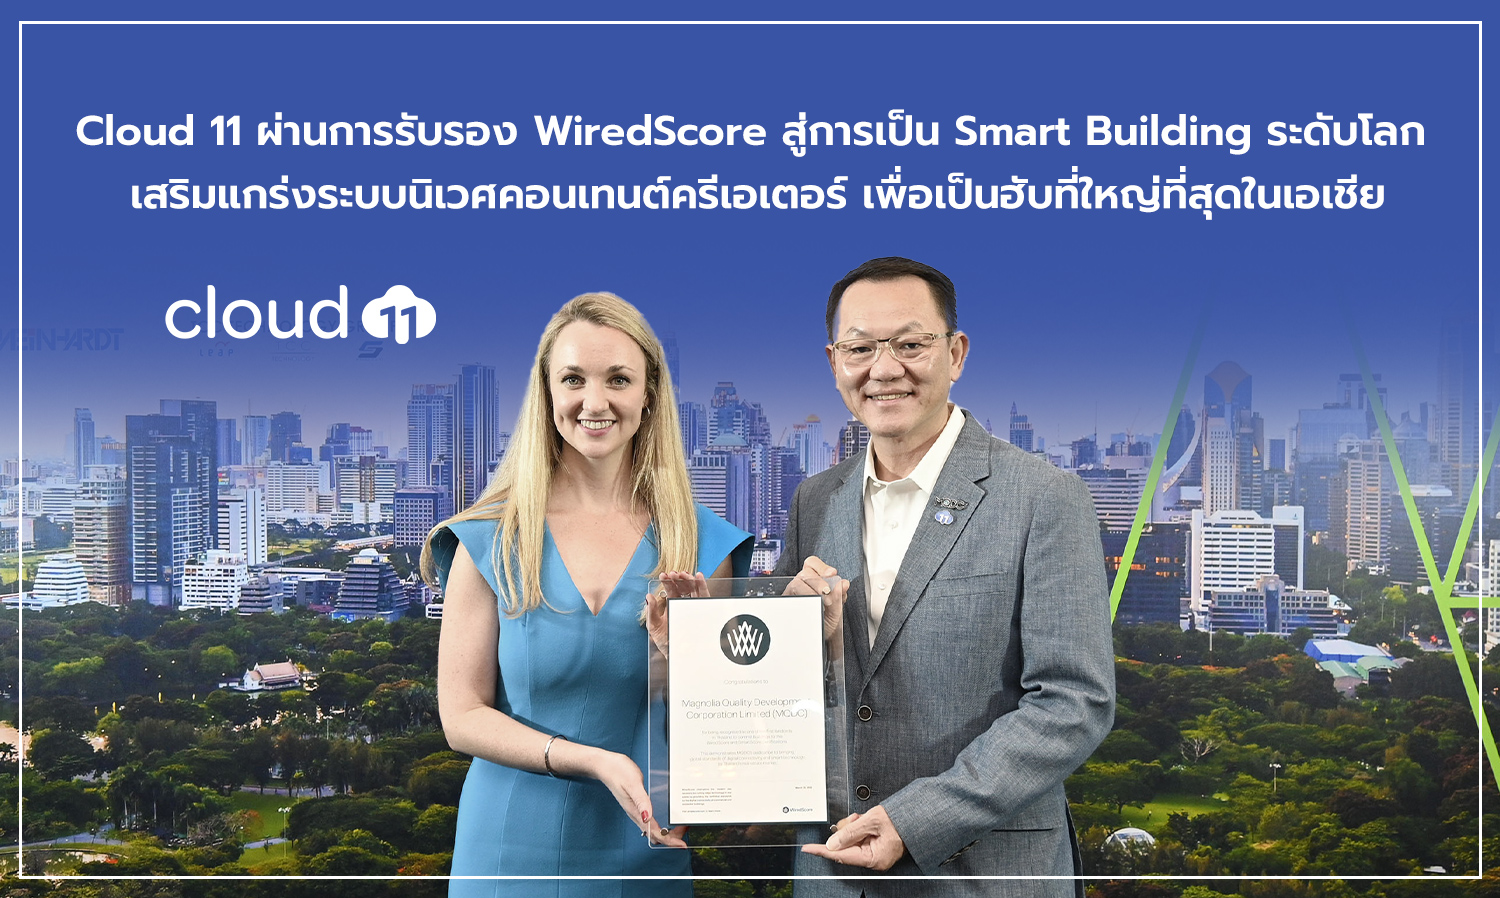 Cloud 11 ผ่านการรับรอง WiredScore สู่การเป็น Smart Building ระดับโลก เสริมแกร่งระบบนิเวศคอนเทนต์ครีเอเตอร์ เพื่อเป็นฮับที่ใหญ่ที่สุดในเอเชีย